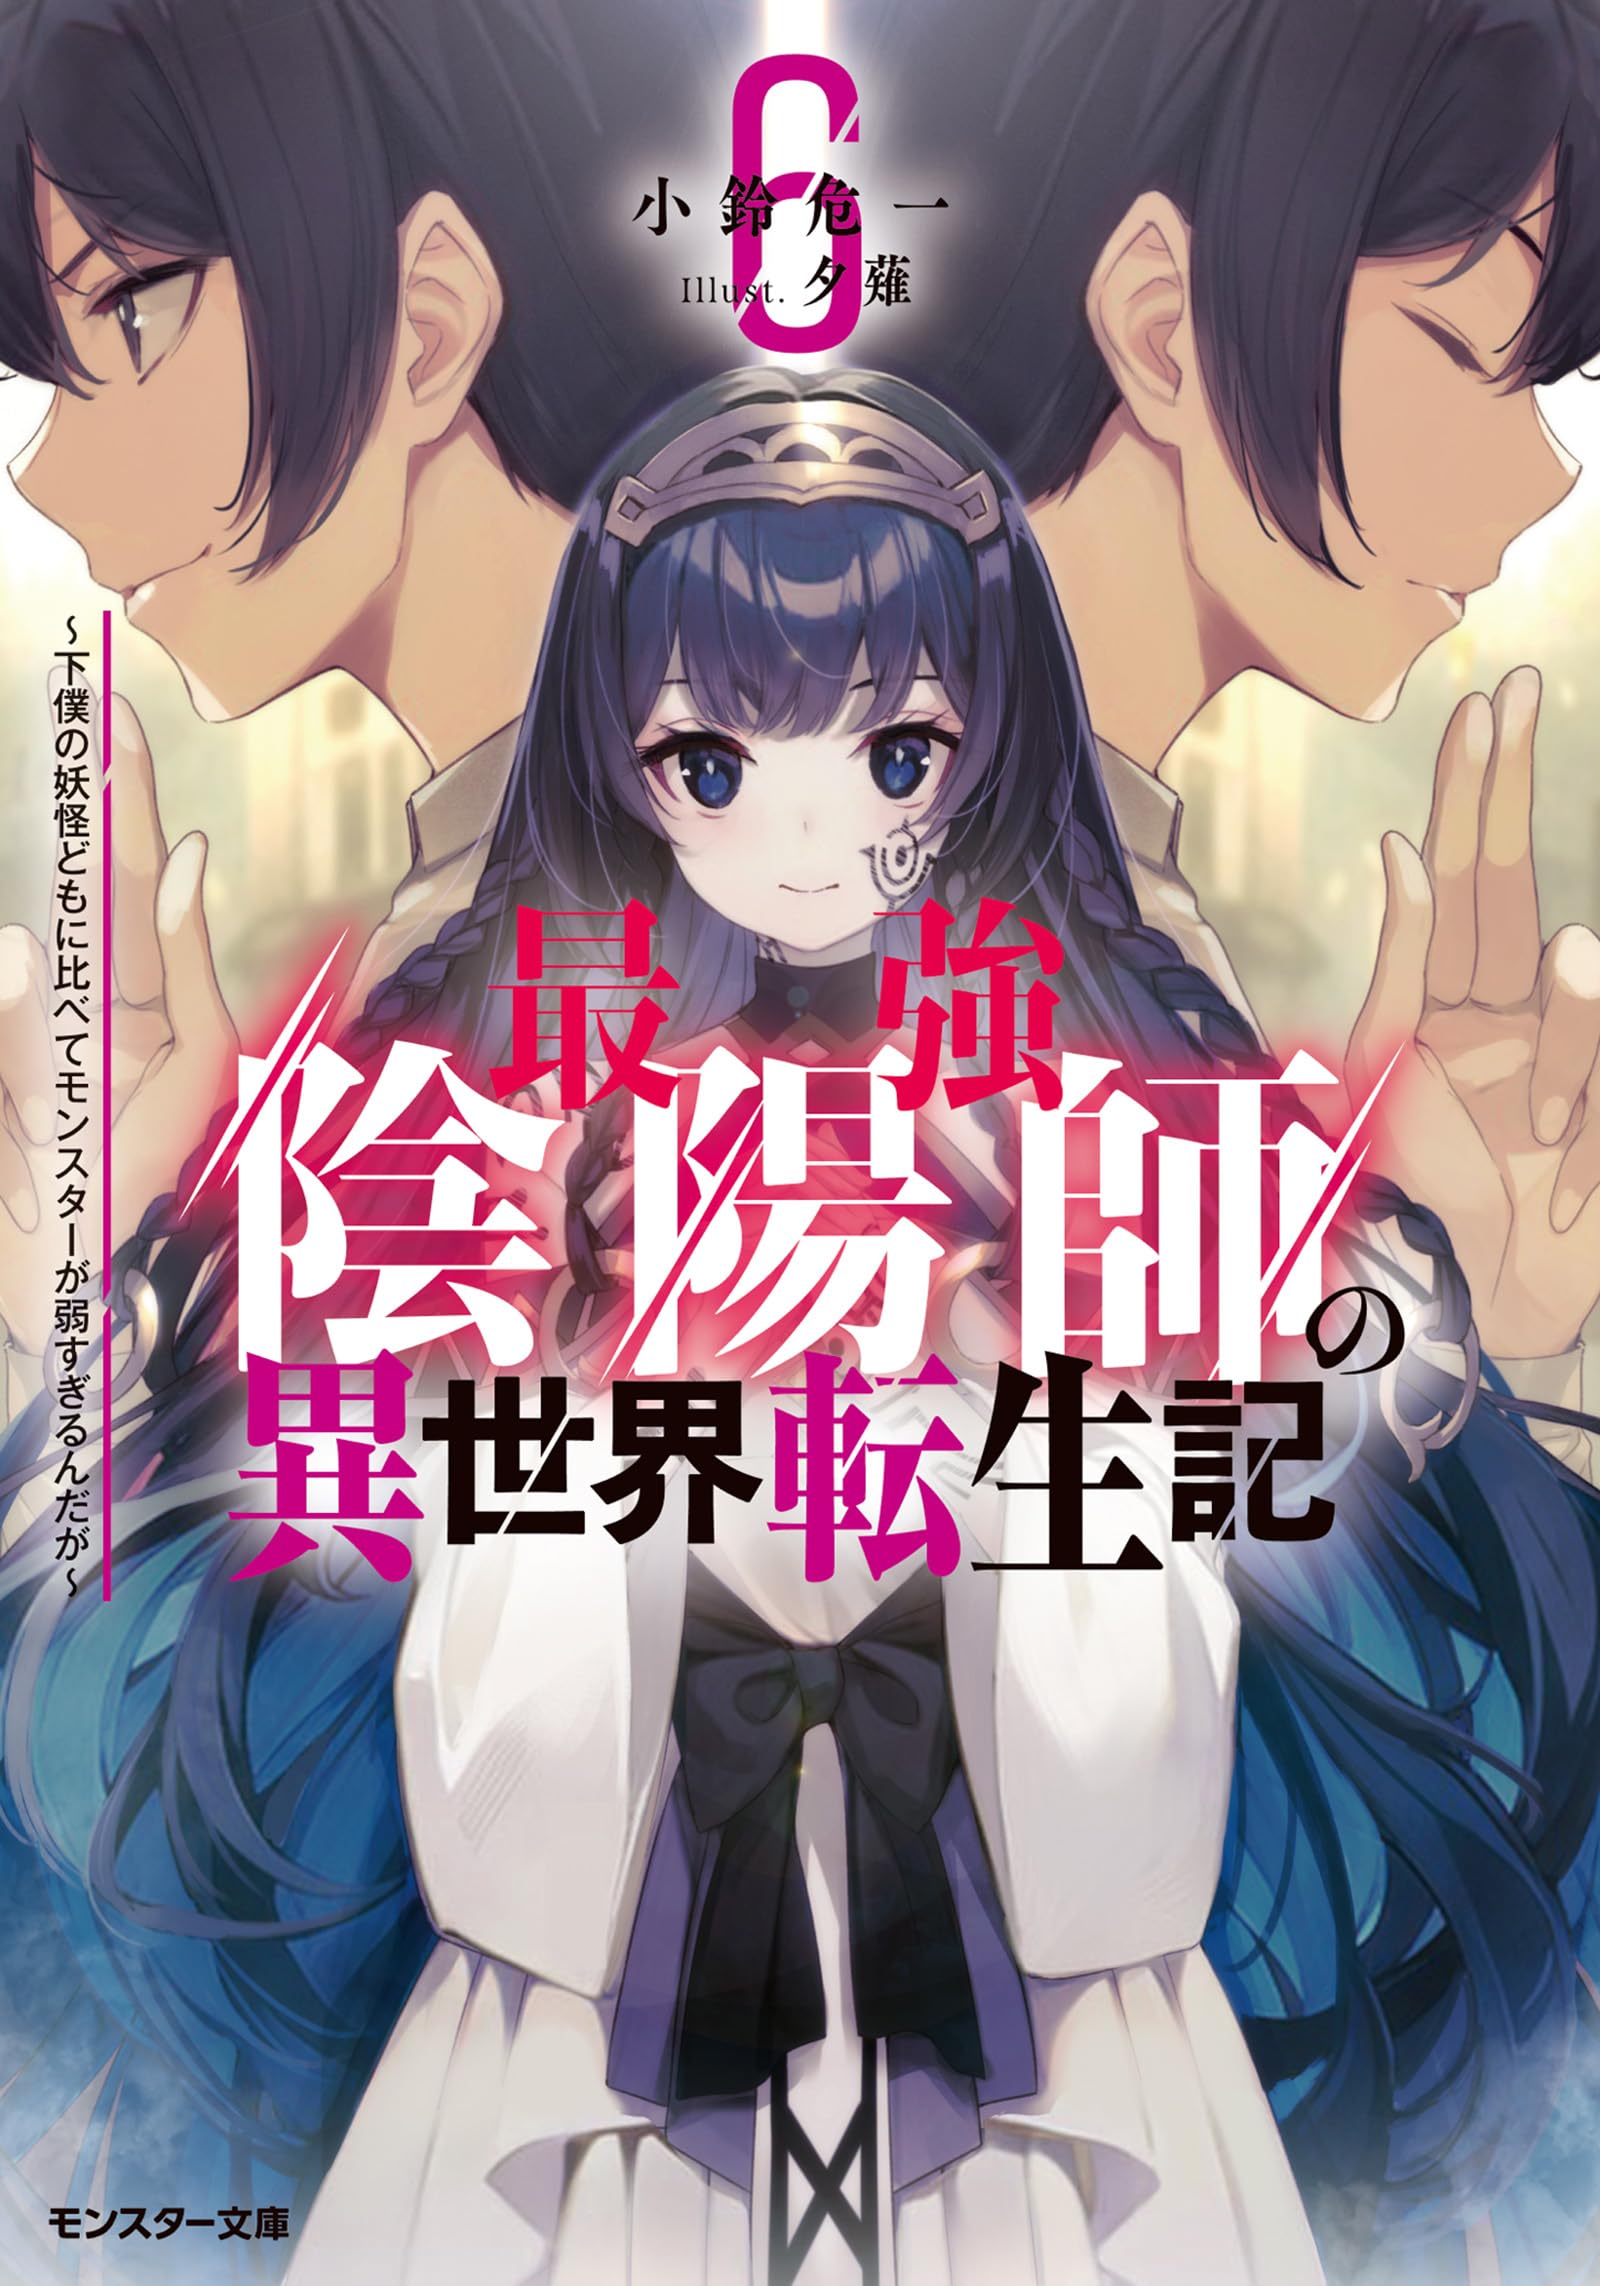 Saikyou Onmyouji no Isekai Tenseiki Light Novels Getting Anime